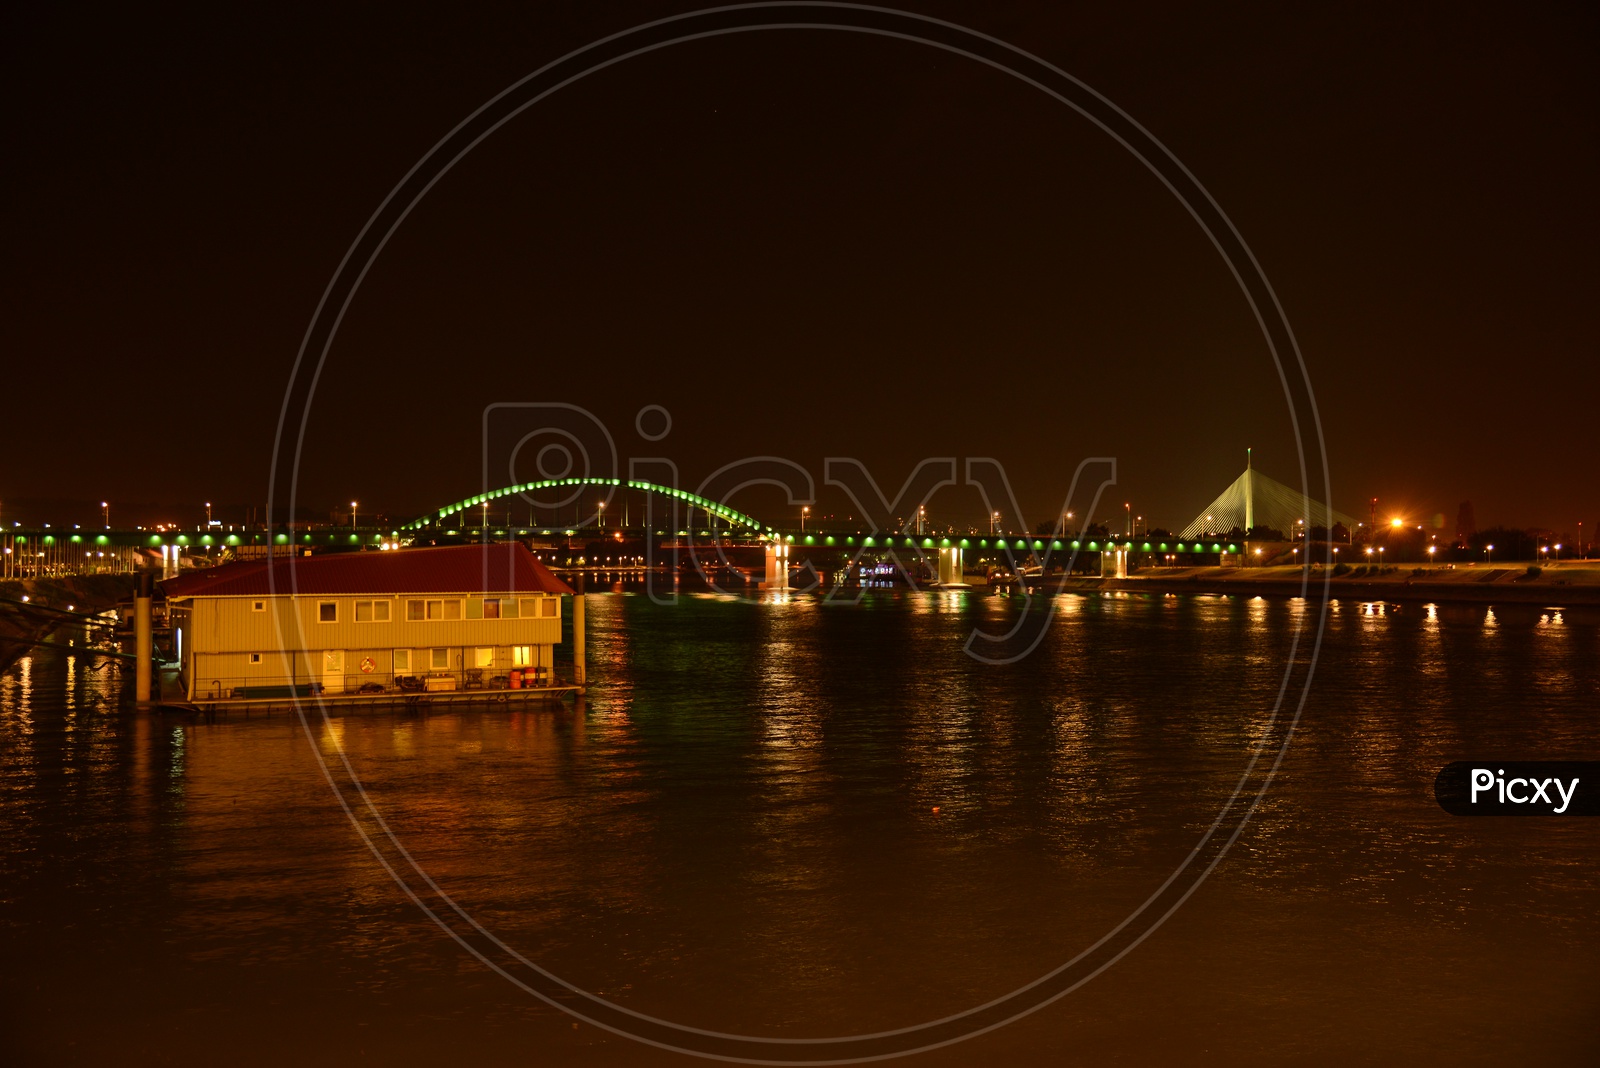 Night Lights View Of The Pont des Arts or Passerelle des Arts  a pedestrian bridge crossing  the River Seine